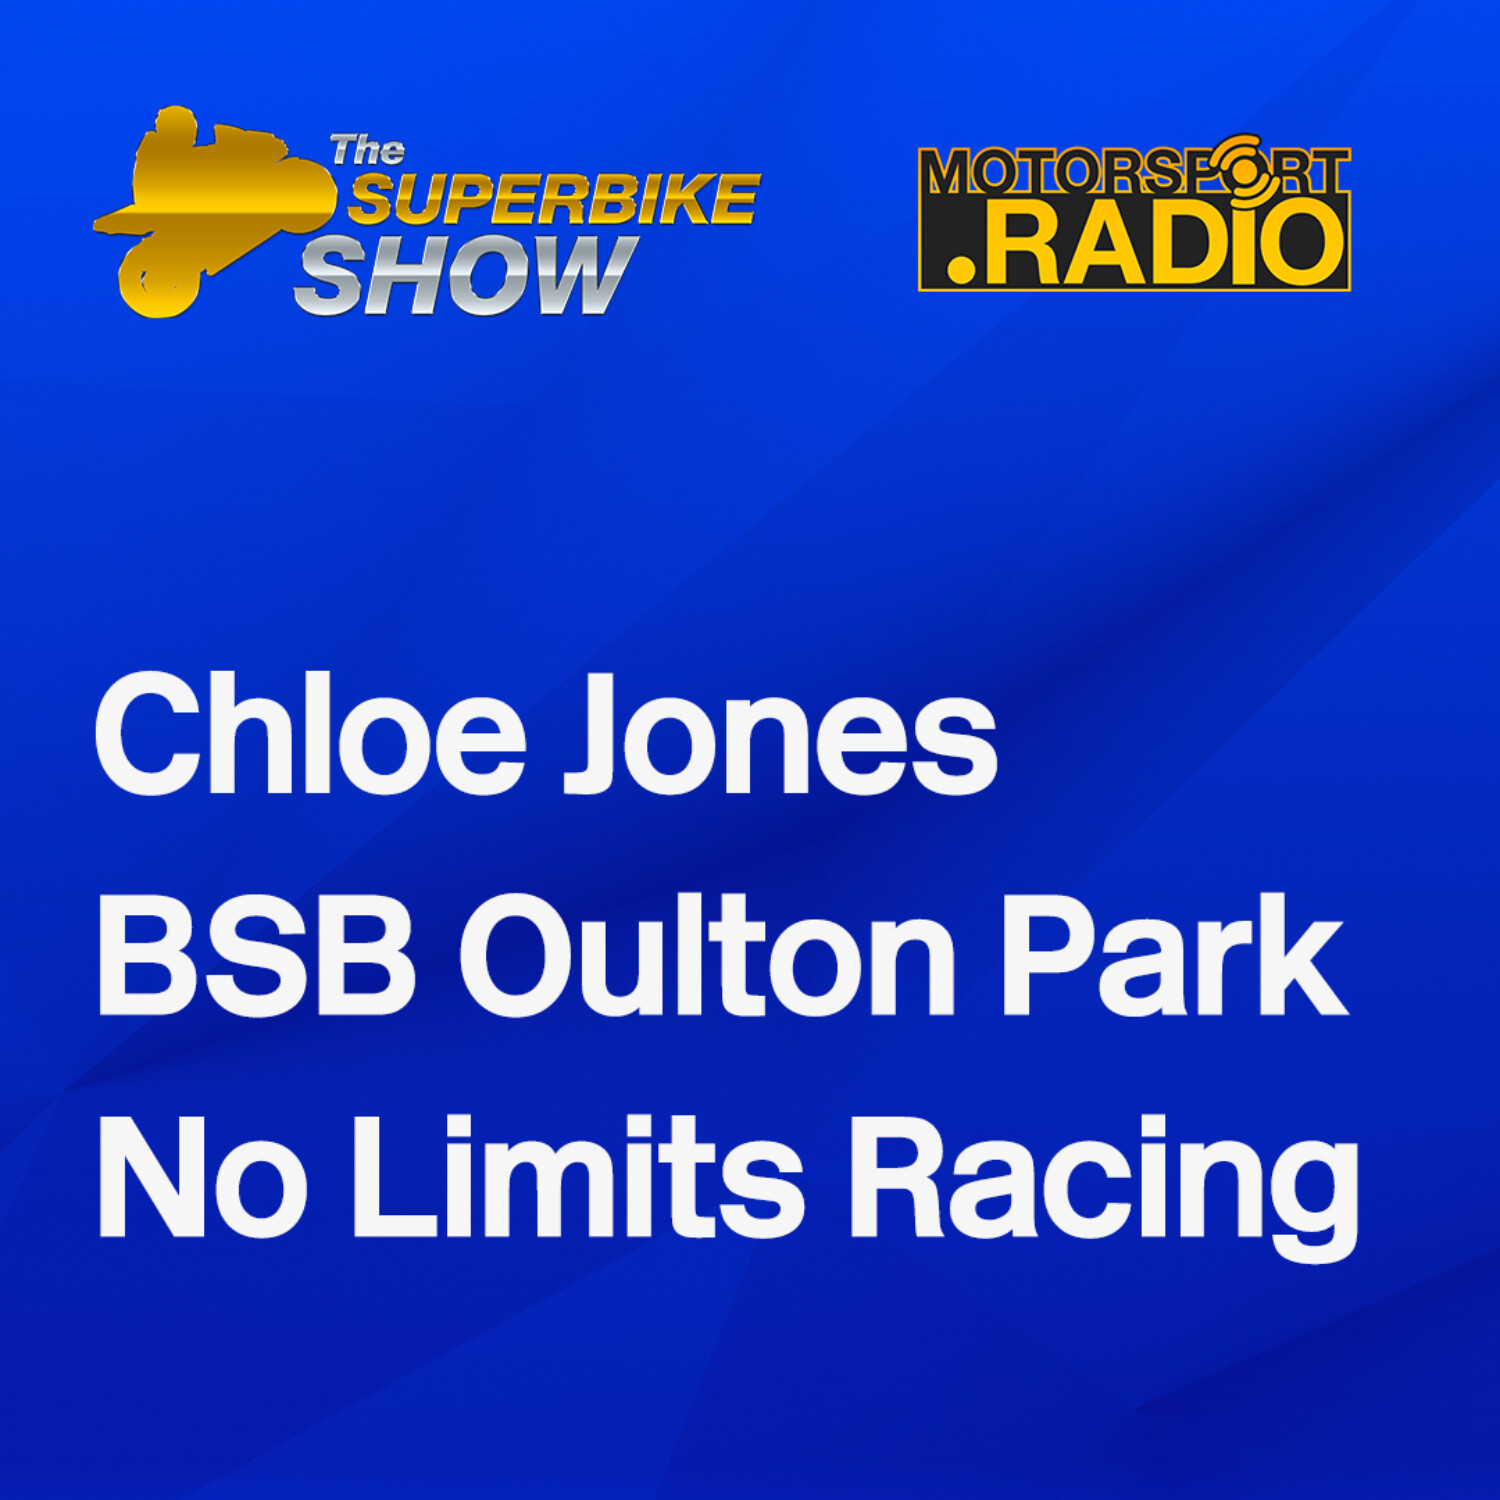 The Superbike Show - Chloe Jones, BSB Oulton Park & No Limits Racing